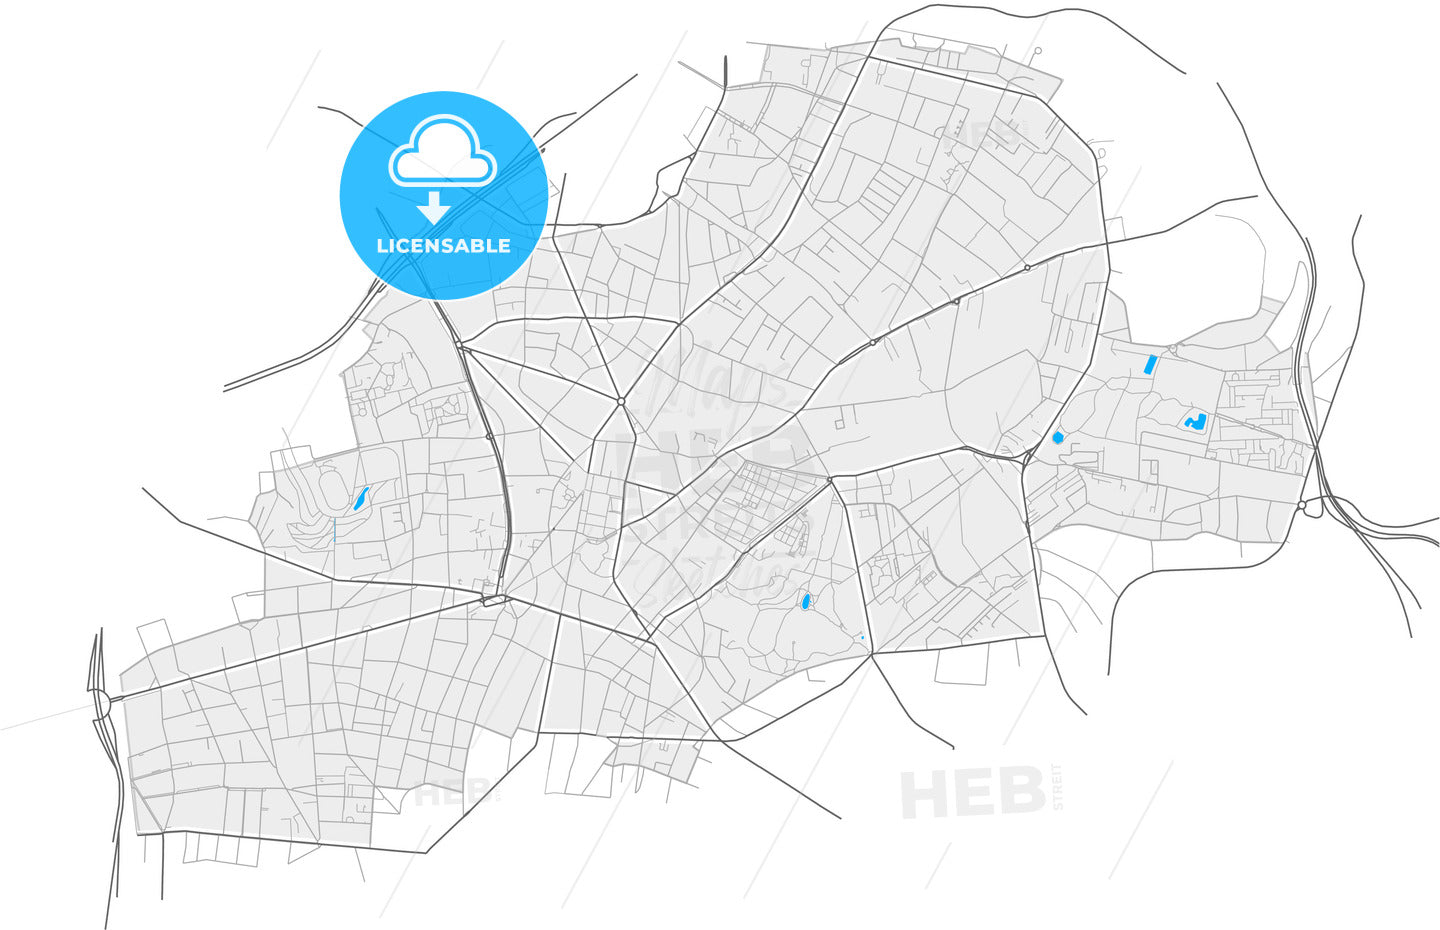 Montreuil, Seine-Saint-Denis, France, high quality vector map